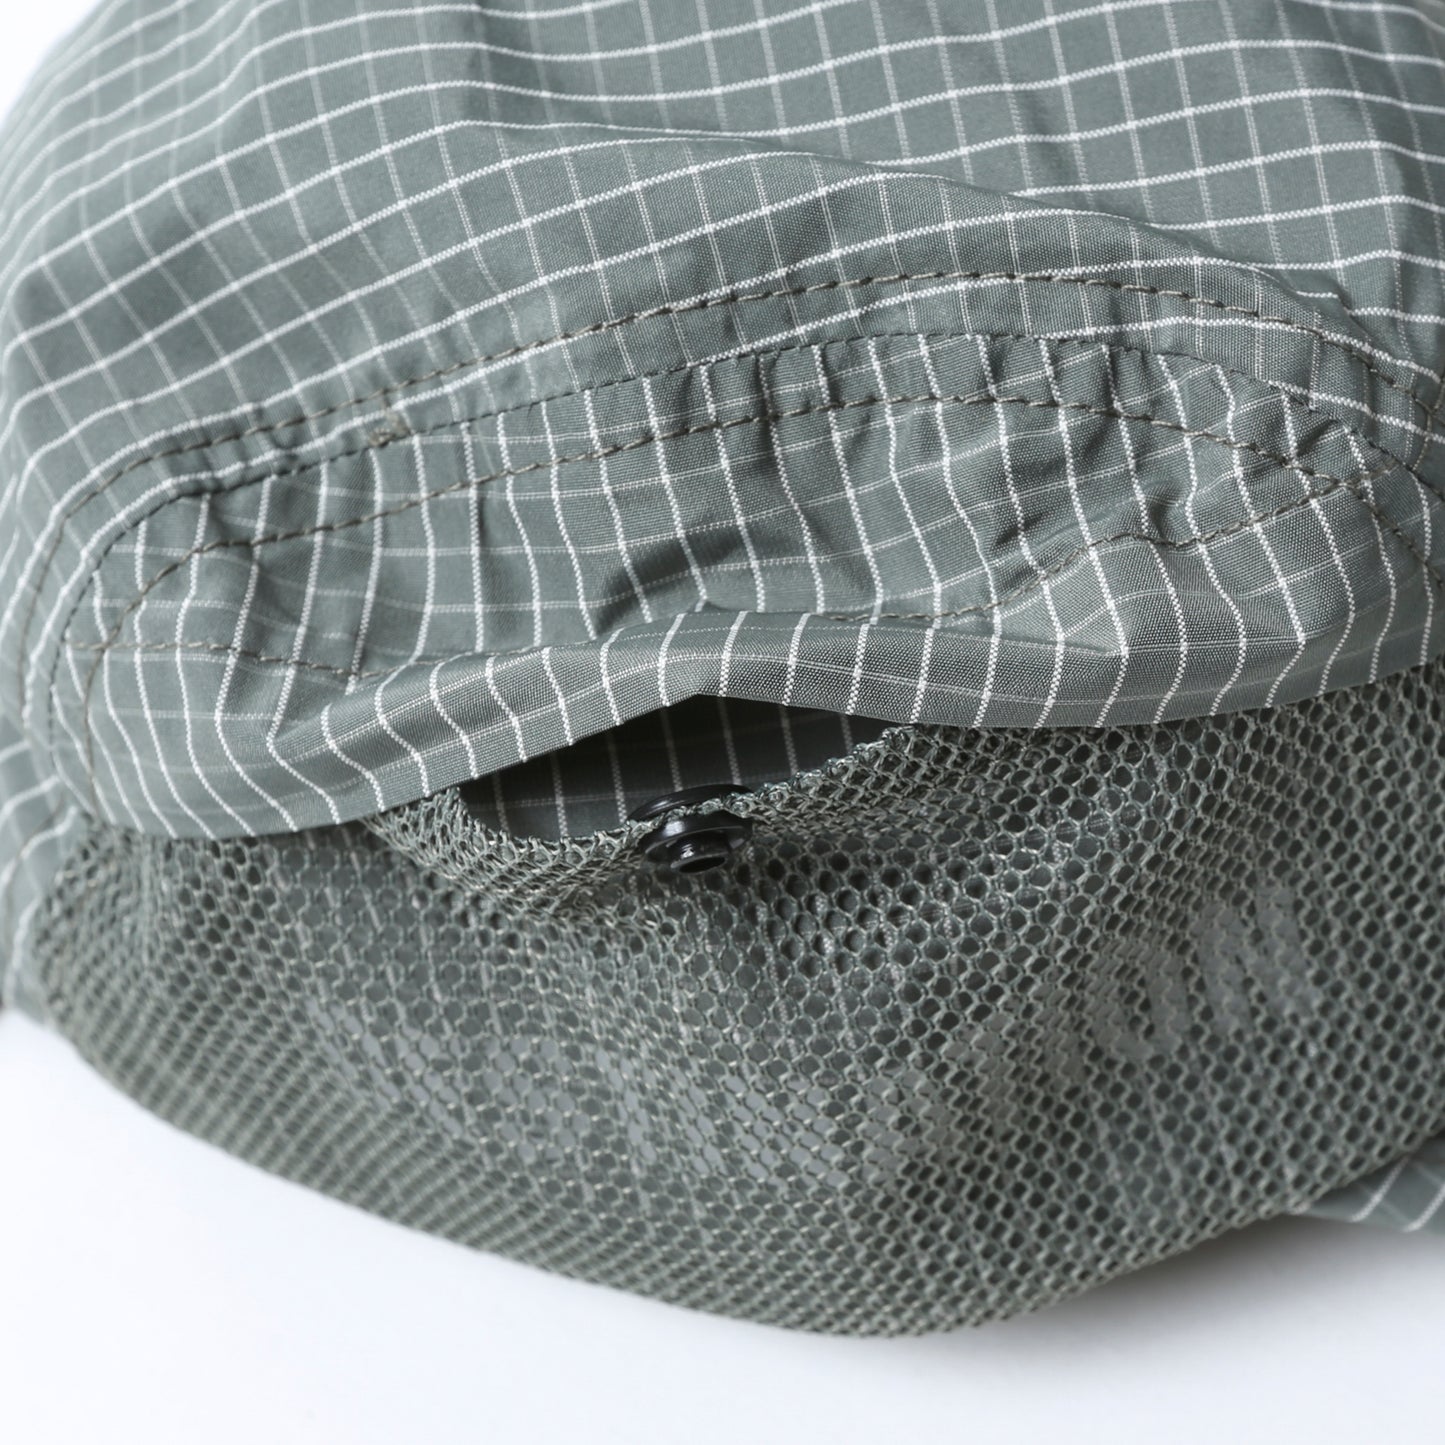 Liberaiders ®(リベレイダース) / GRID CLOTH CAP 70901 GREEN